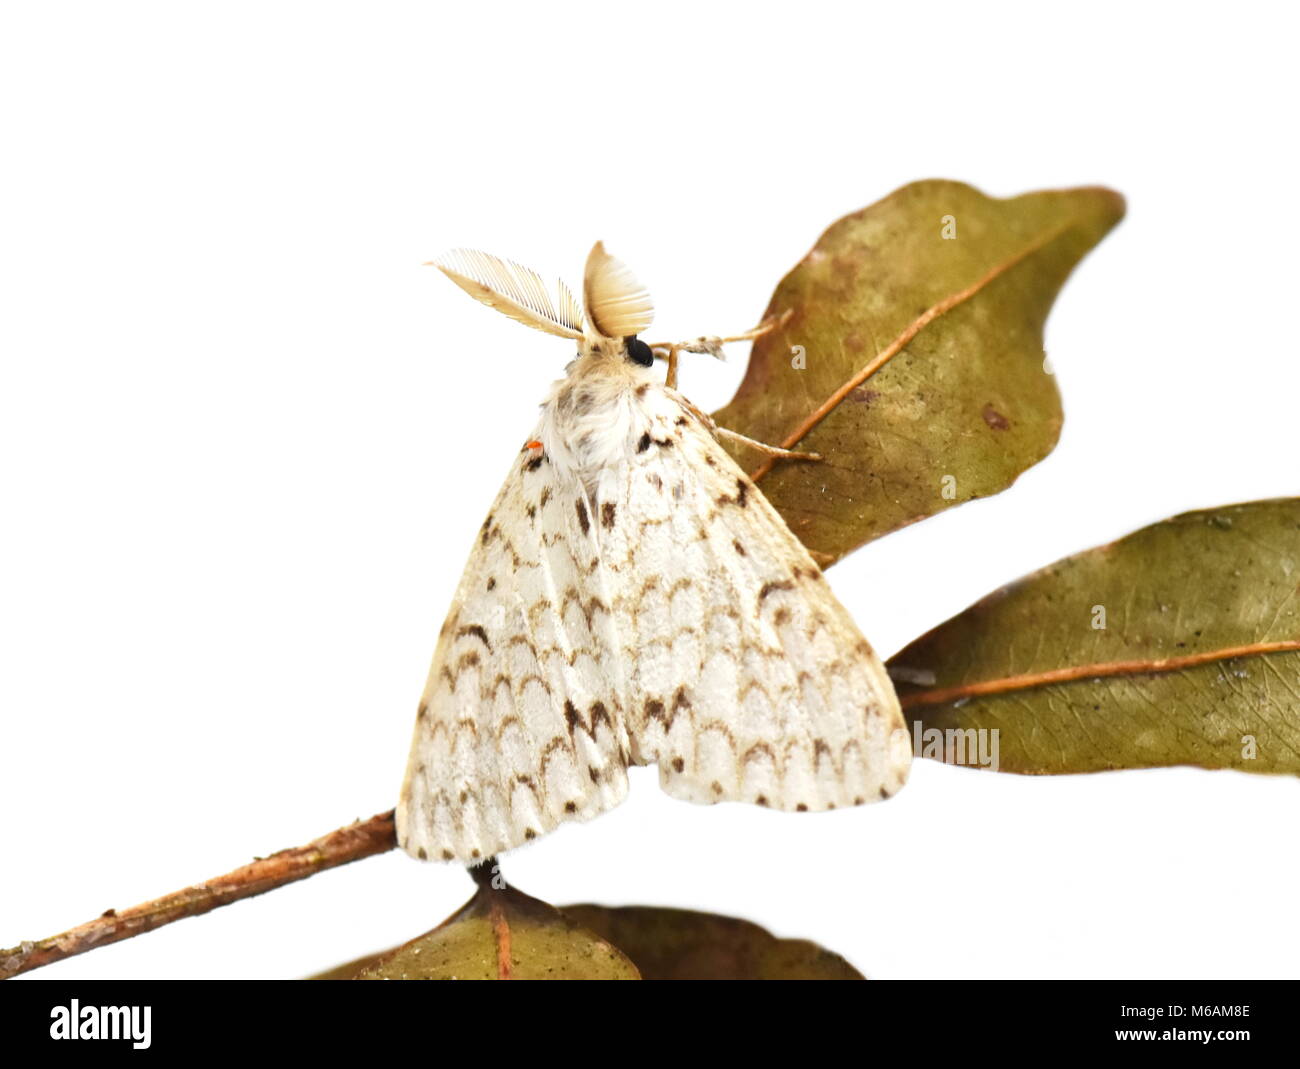 Lymantria male moth from Madagascar on white background Stock Photo